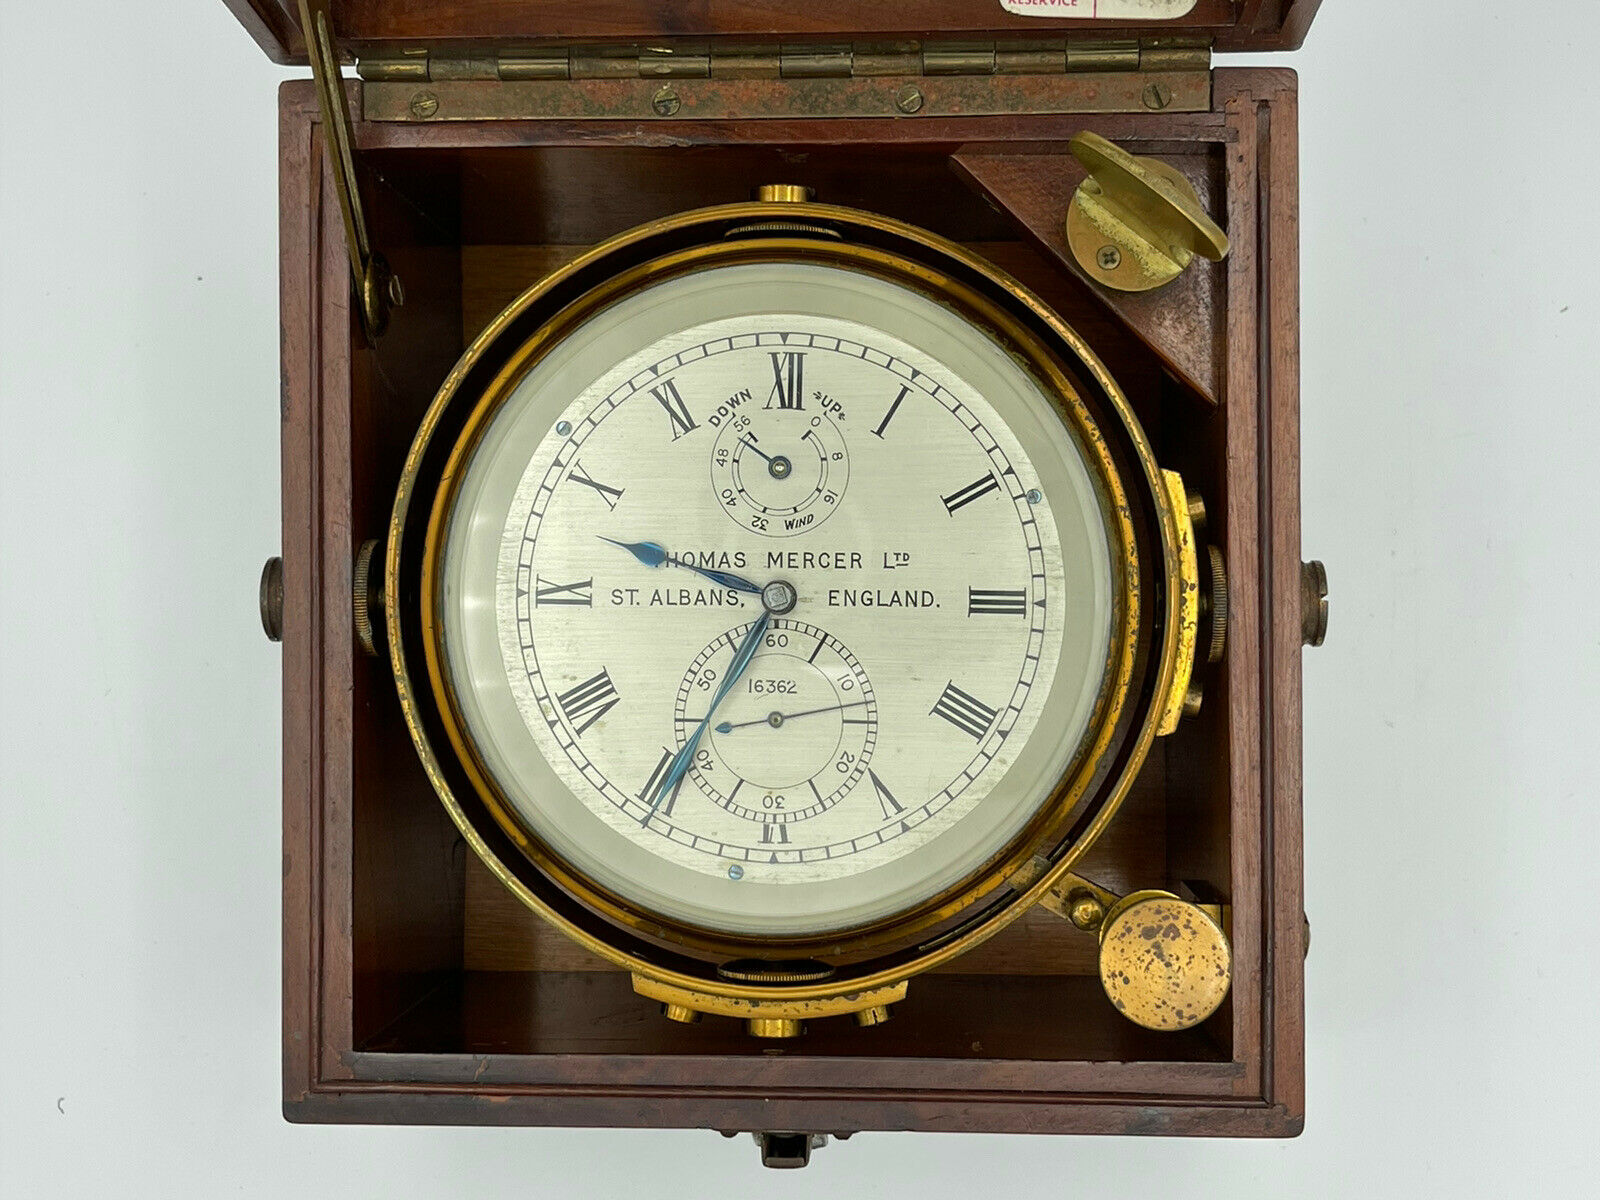 Thomas Mercer Marine Chronometer, Serial #16362